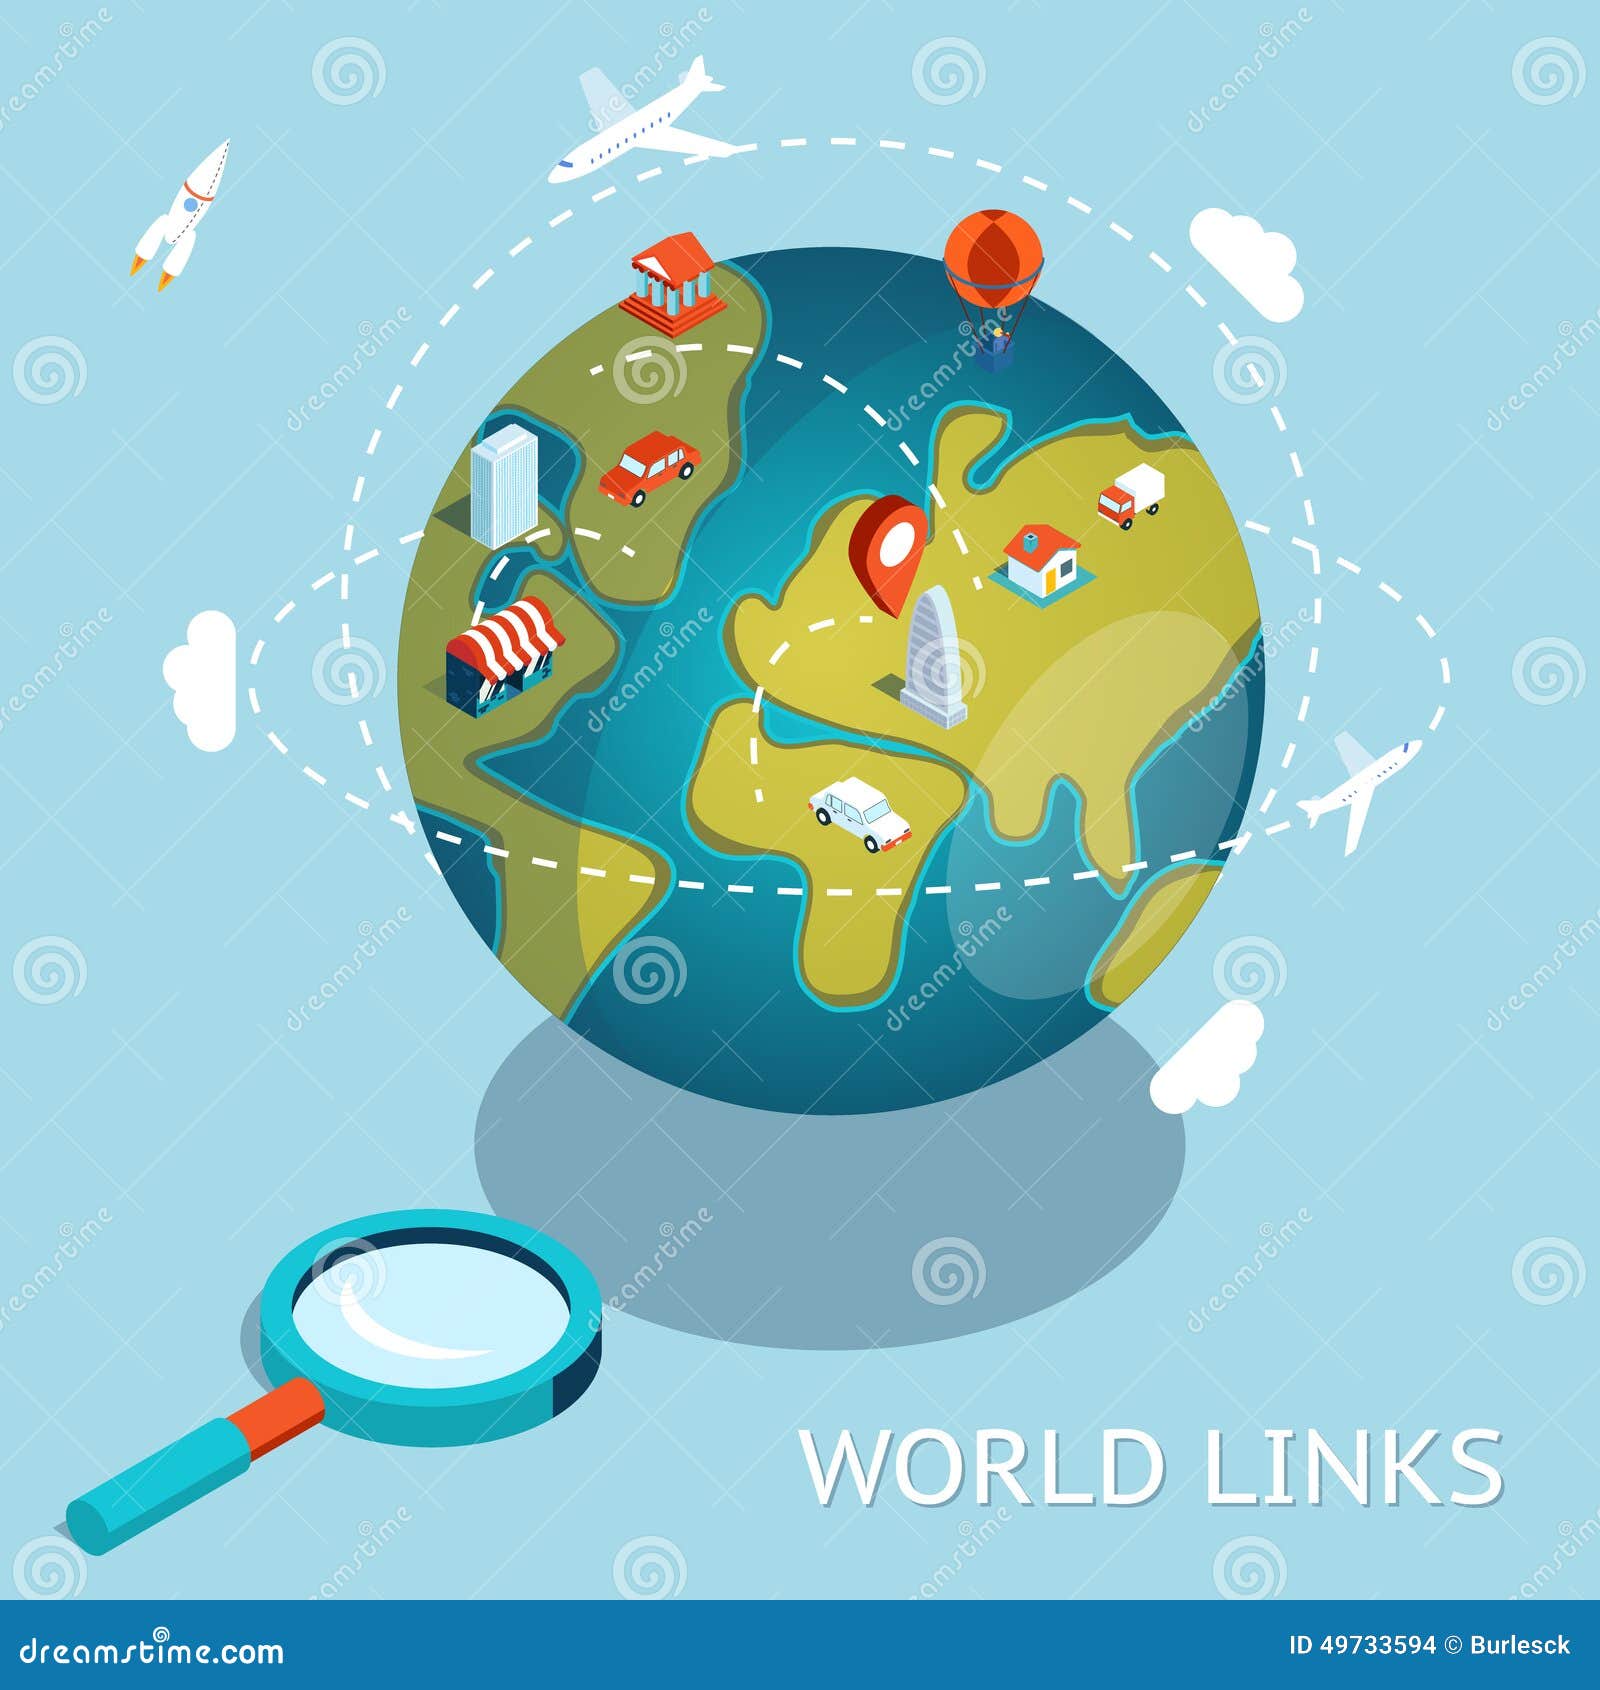 world links travel